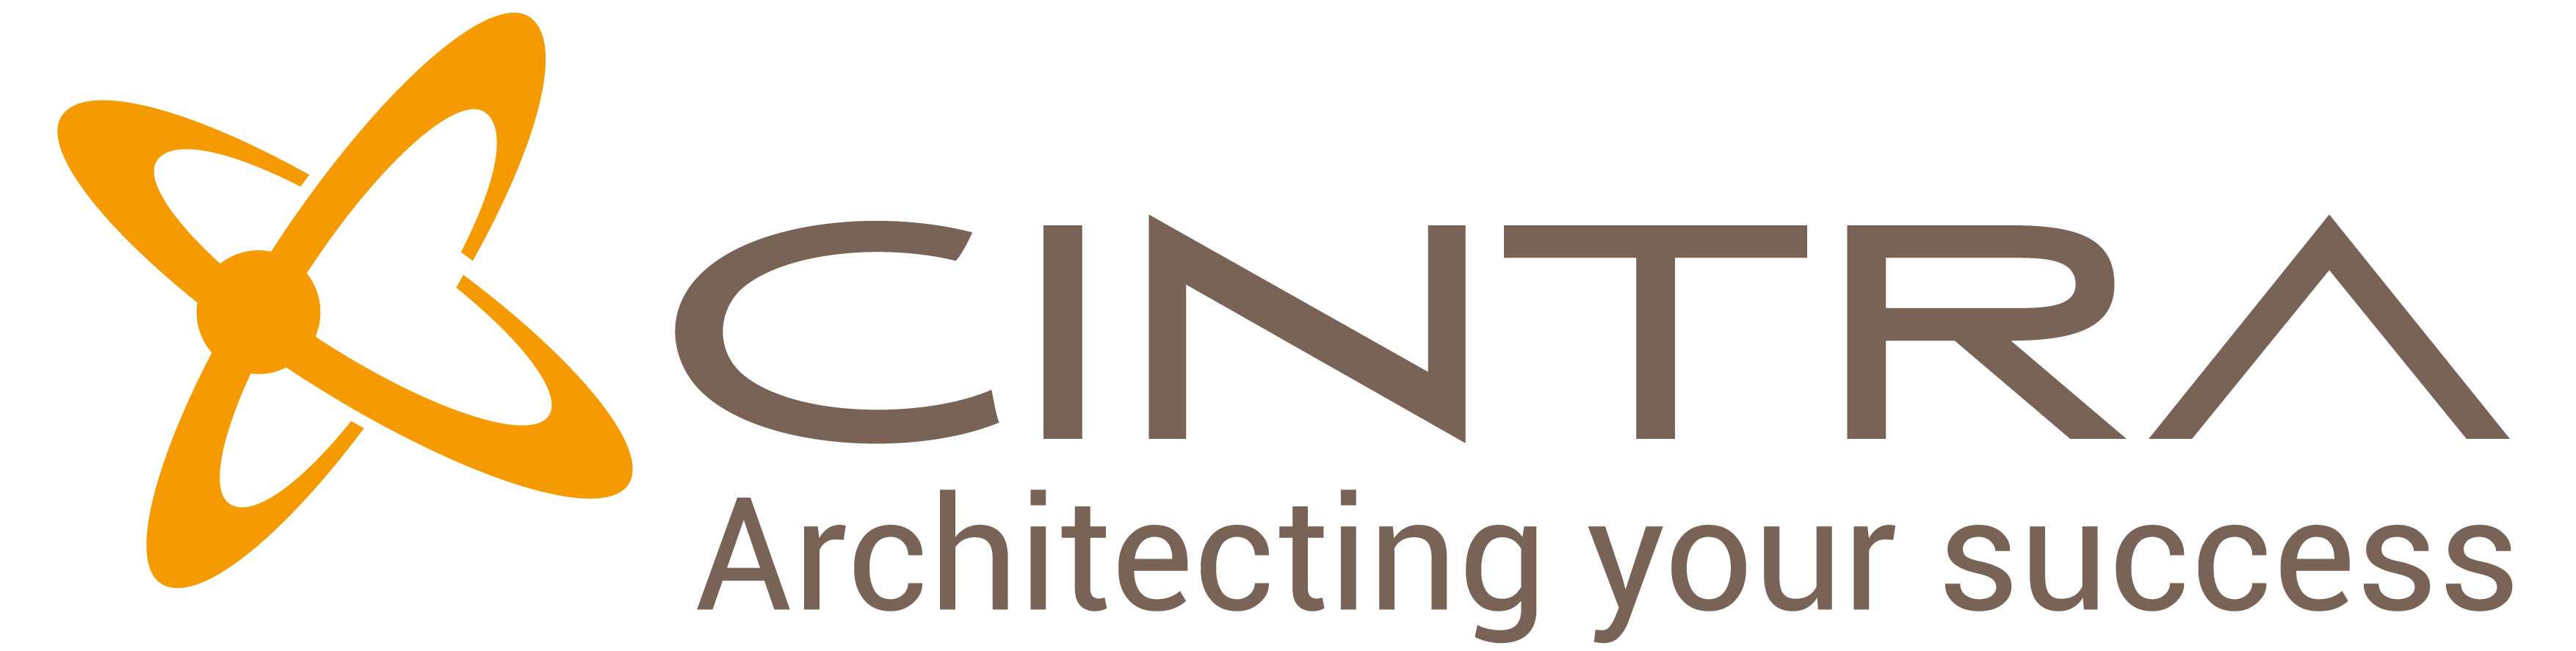 Cintra_logo